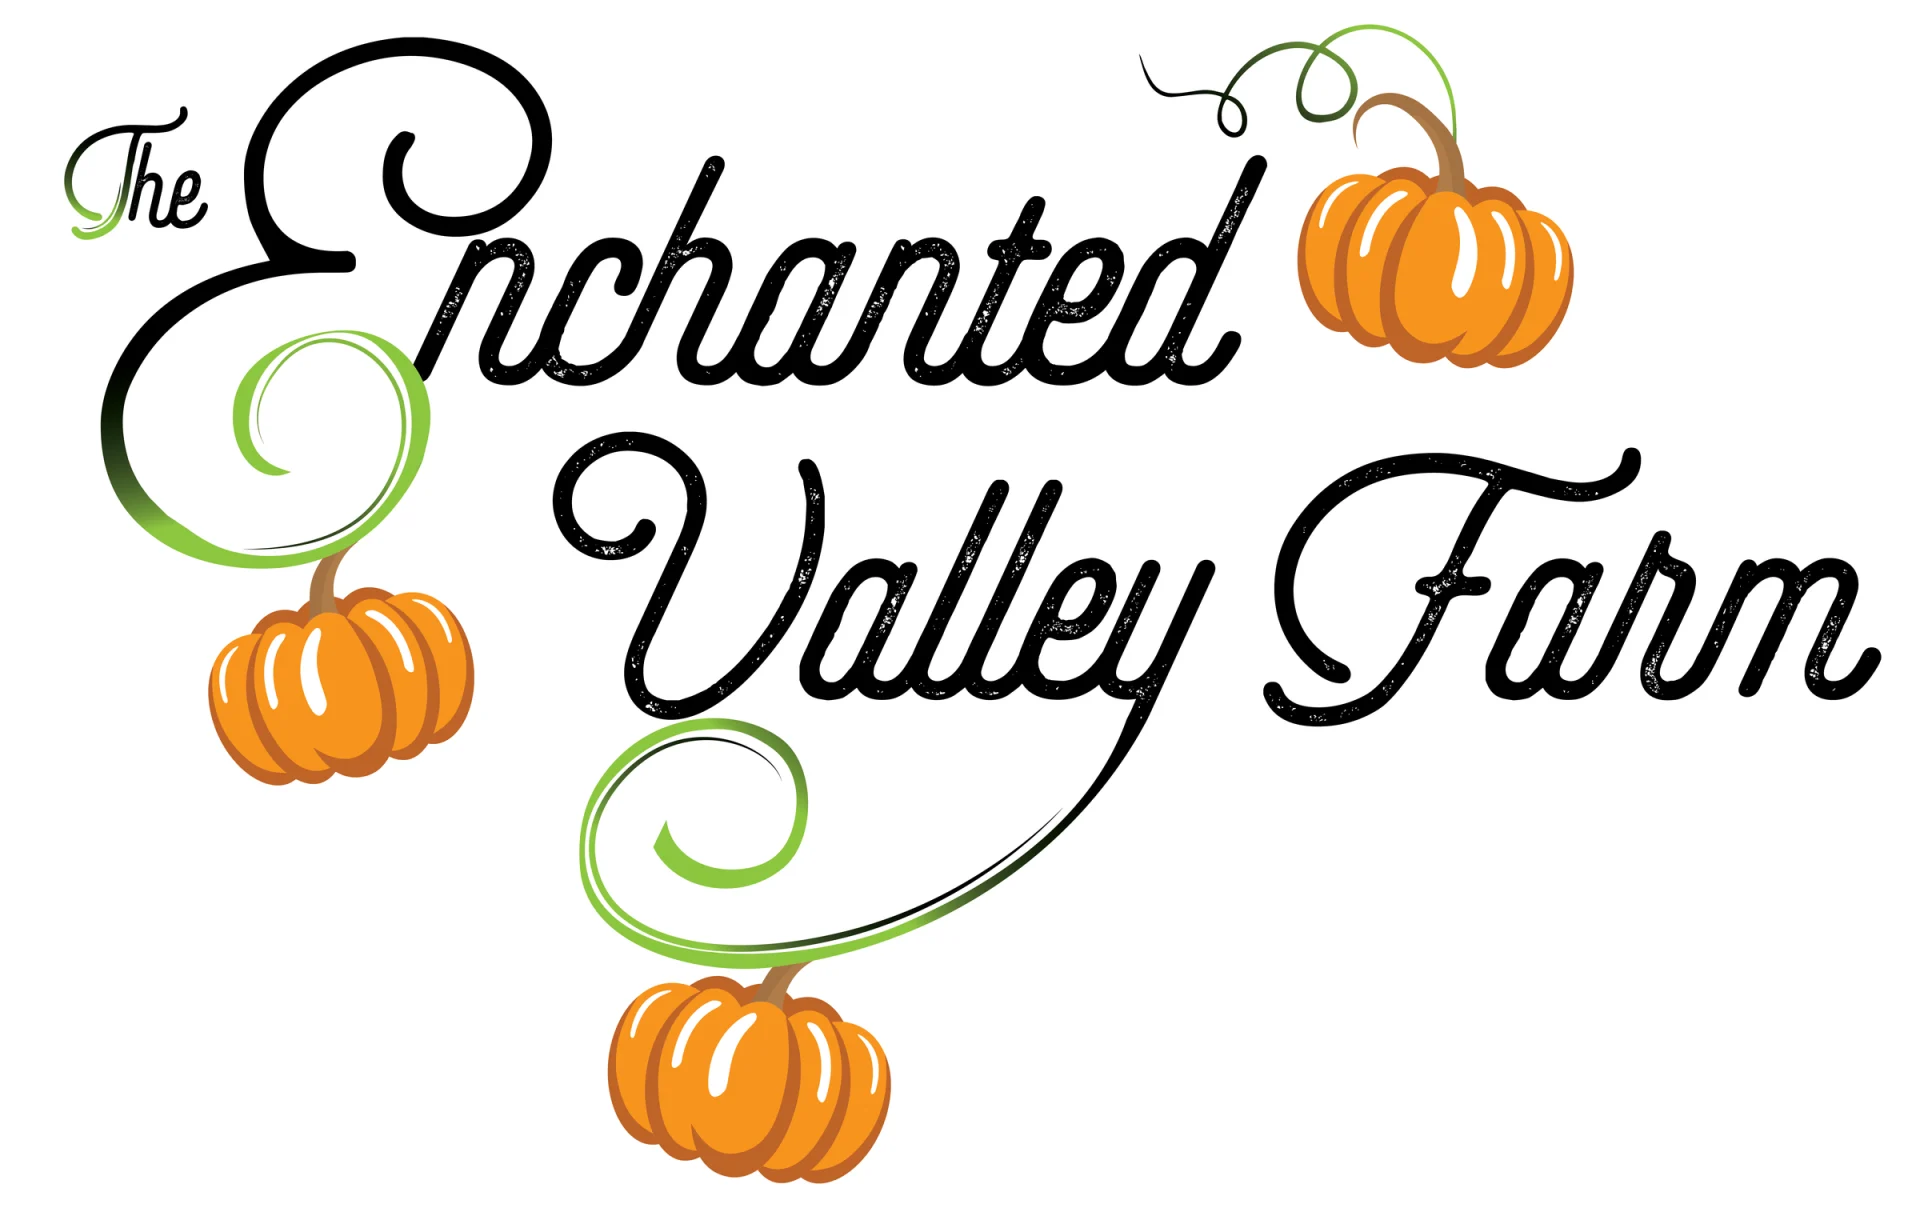 The Enchanted Valley Farm